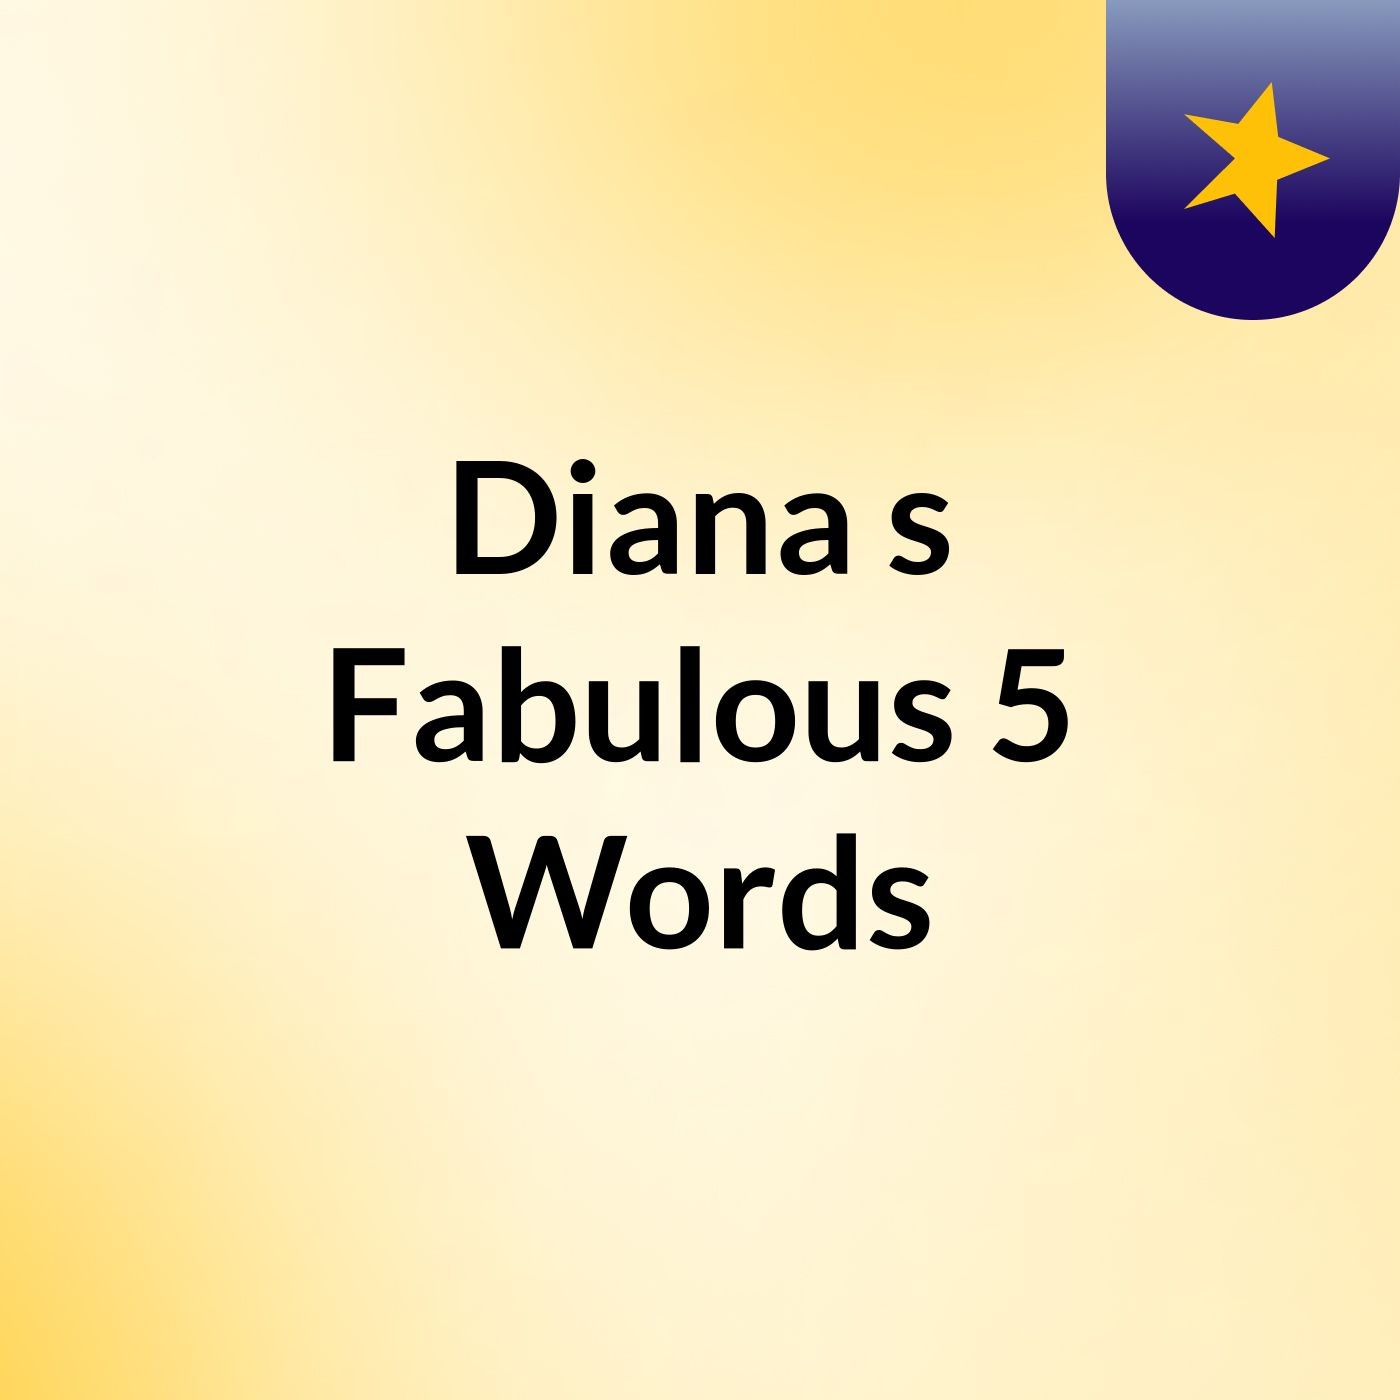 Diana's Fabulous 5 Words